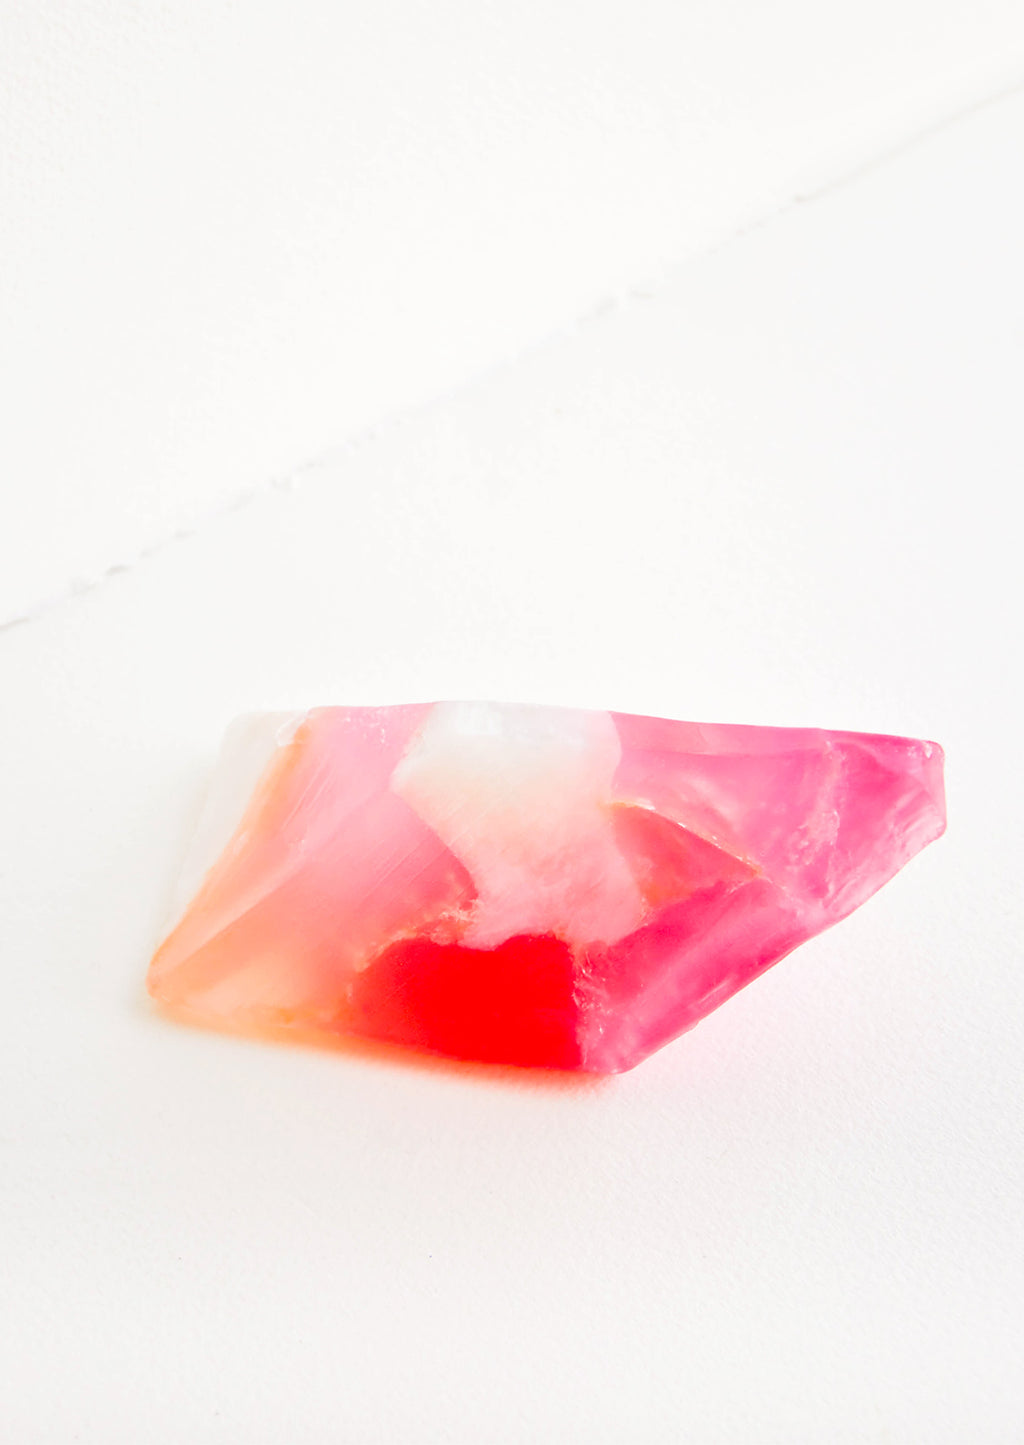 Rose Quartz: Bar soap in the form of a realistic looking rose quartz gemstone